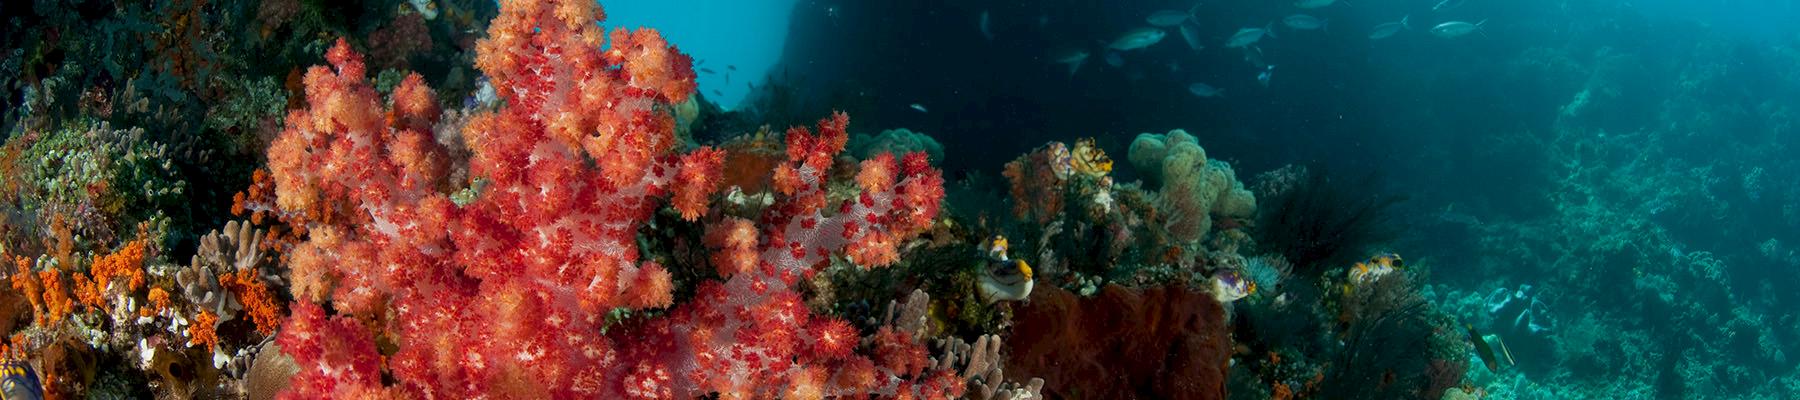 Coral Reefs, Raja Ampat, West Papua, Indonesia © Jürgen Freund / WWF